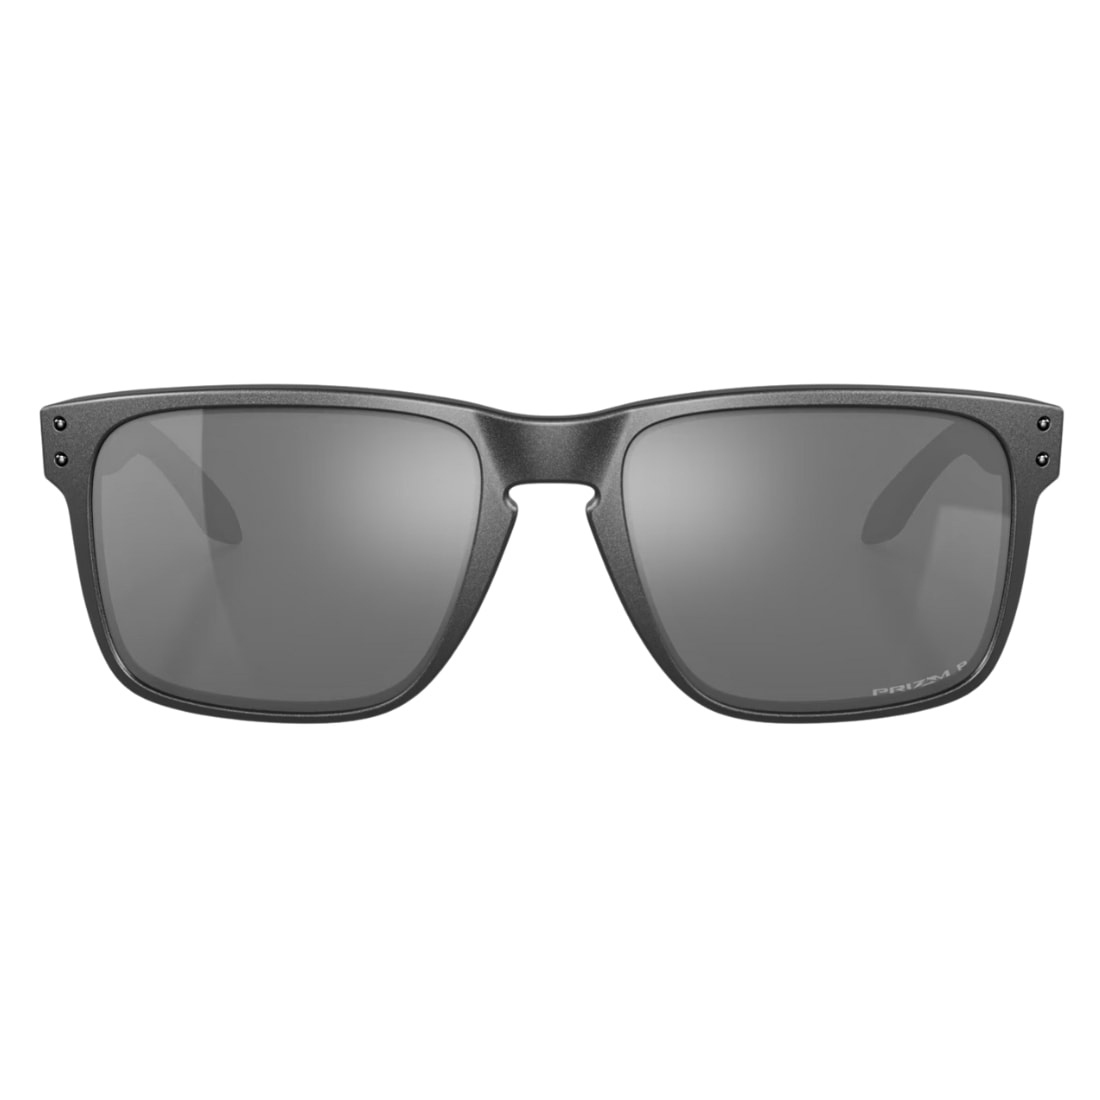 Oakley Holbrook Xl Polarised Sunglasses - Steel/Prizm Black Polarized - Square/Rectangular Sunglasses by Oakley